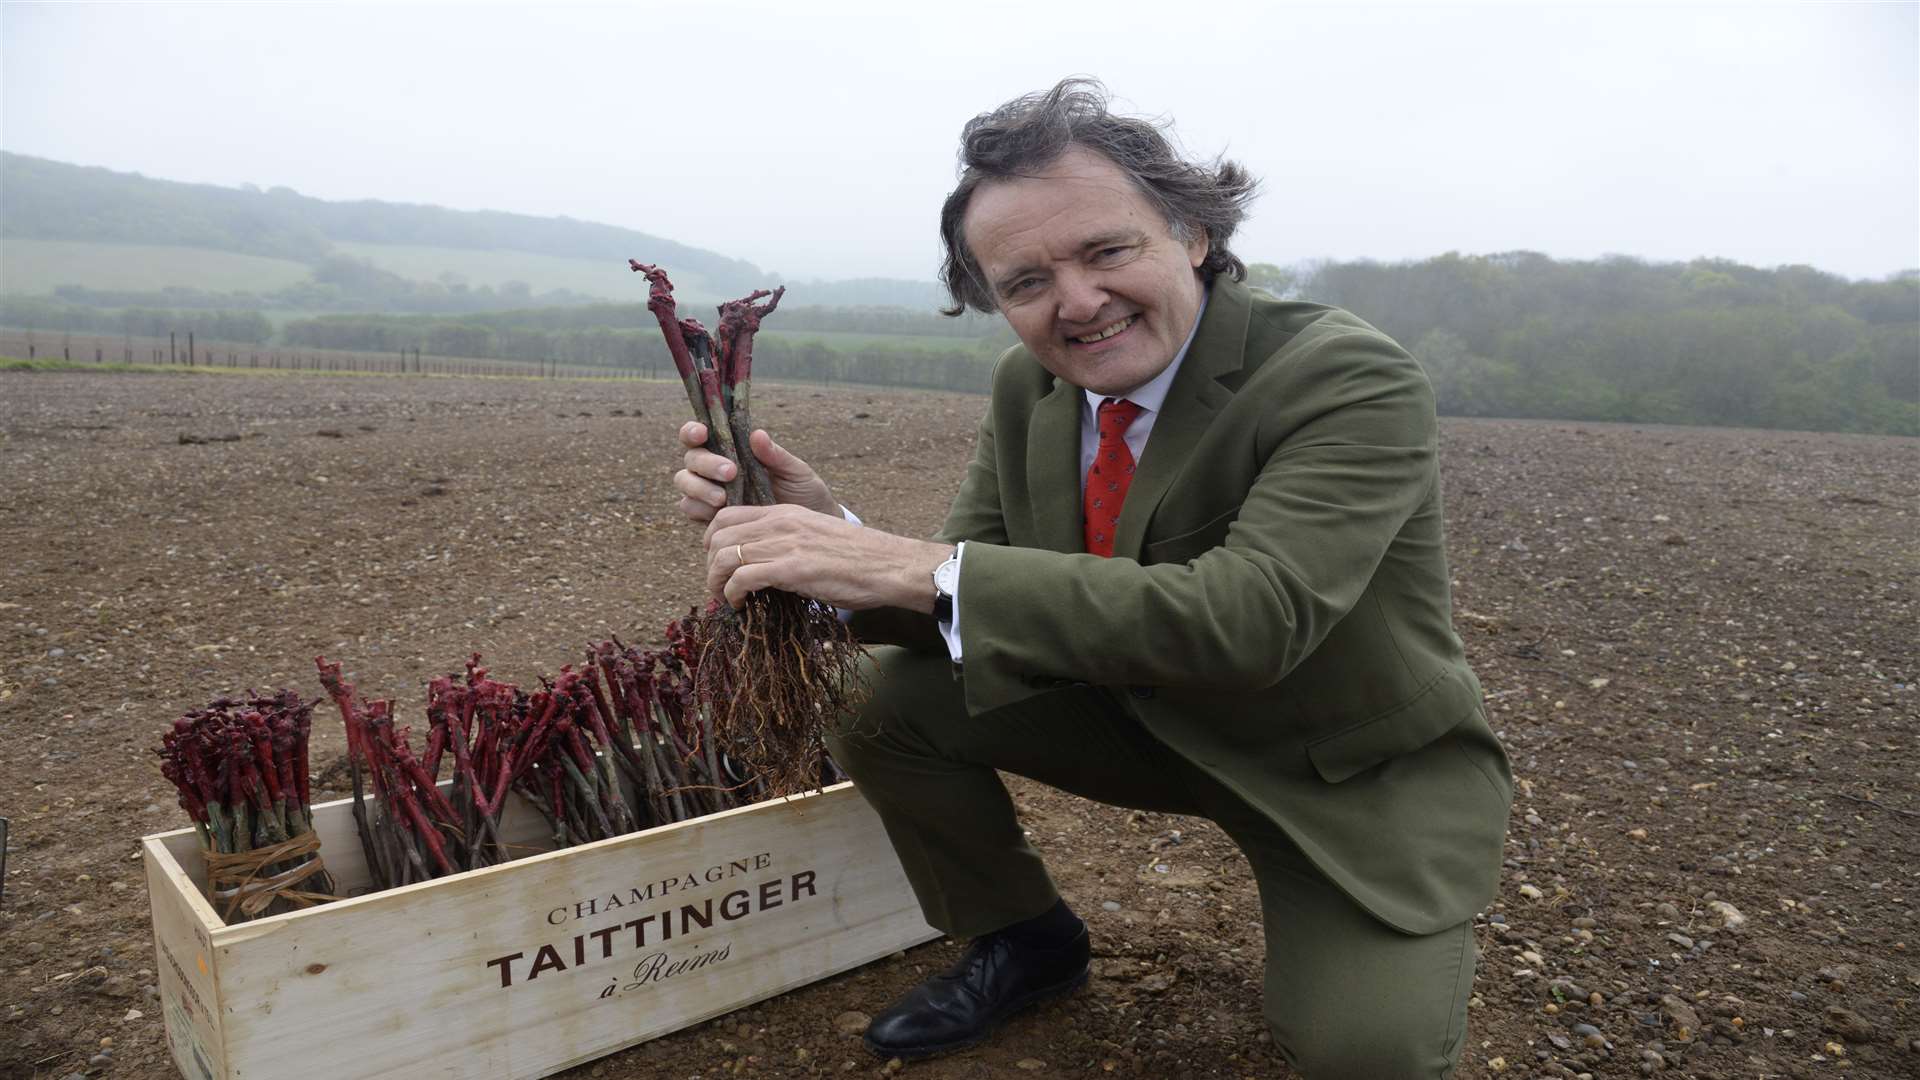 Pierre-Emmanuel Taittinger at the new Taittinger Champagne-backed vineyard Domain Evremond in Chilham